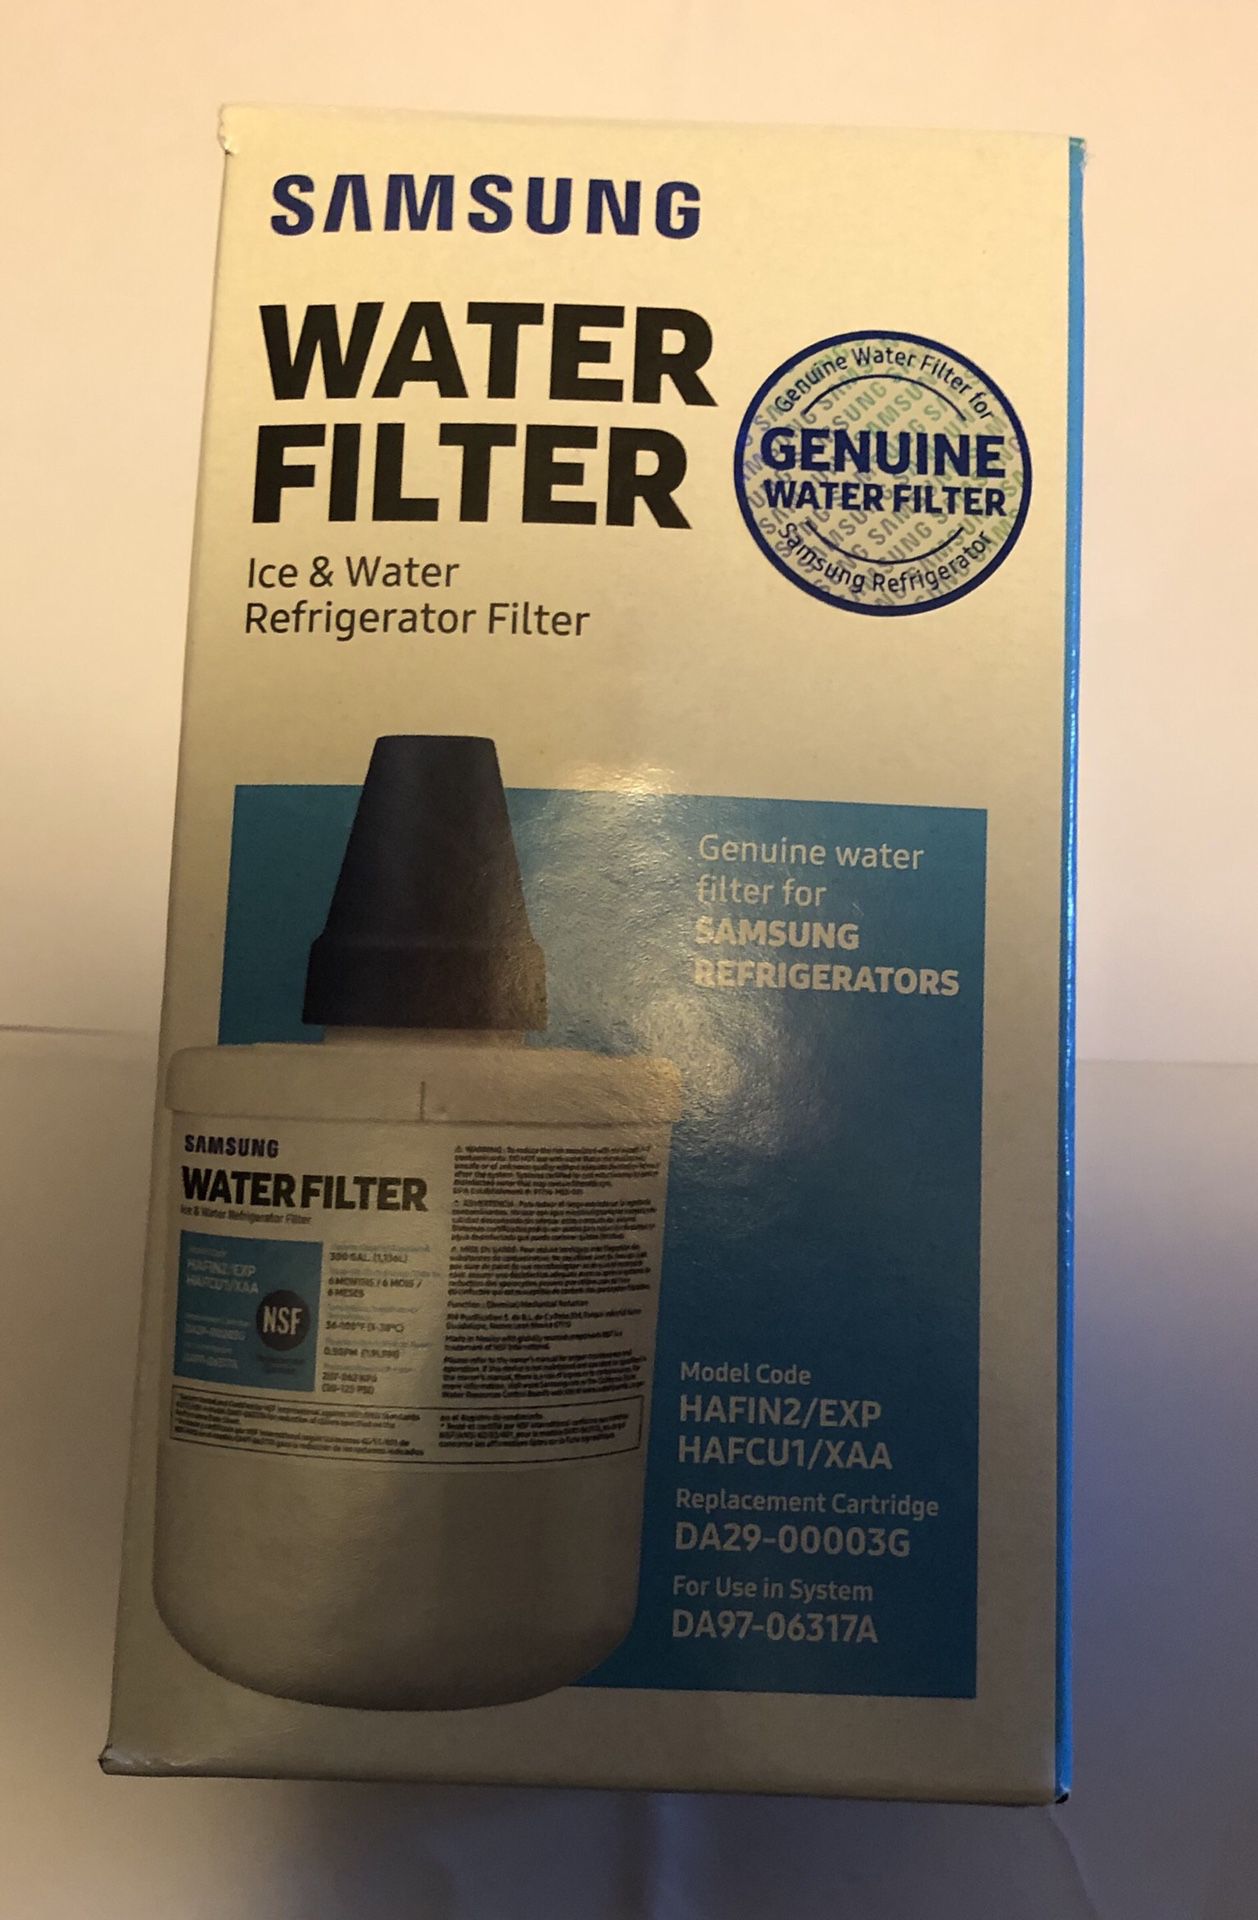 Samsung water filter ice & water refrigerator filter